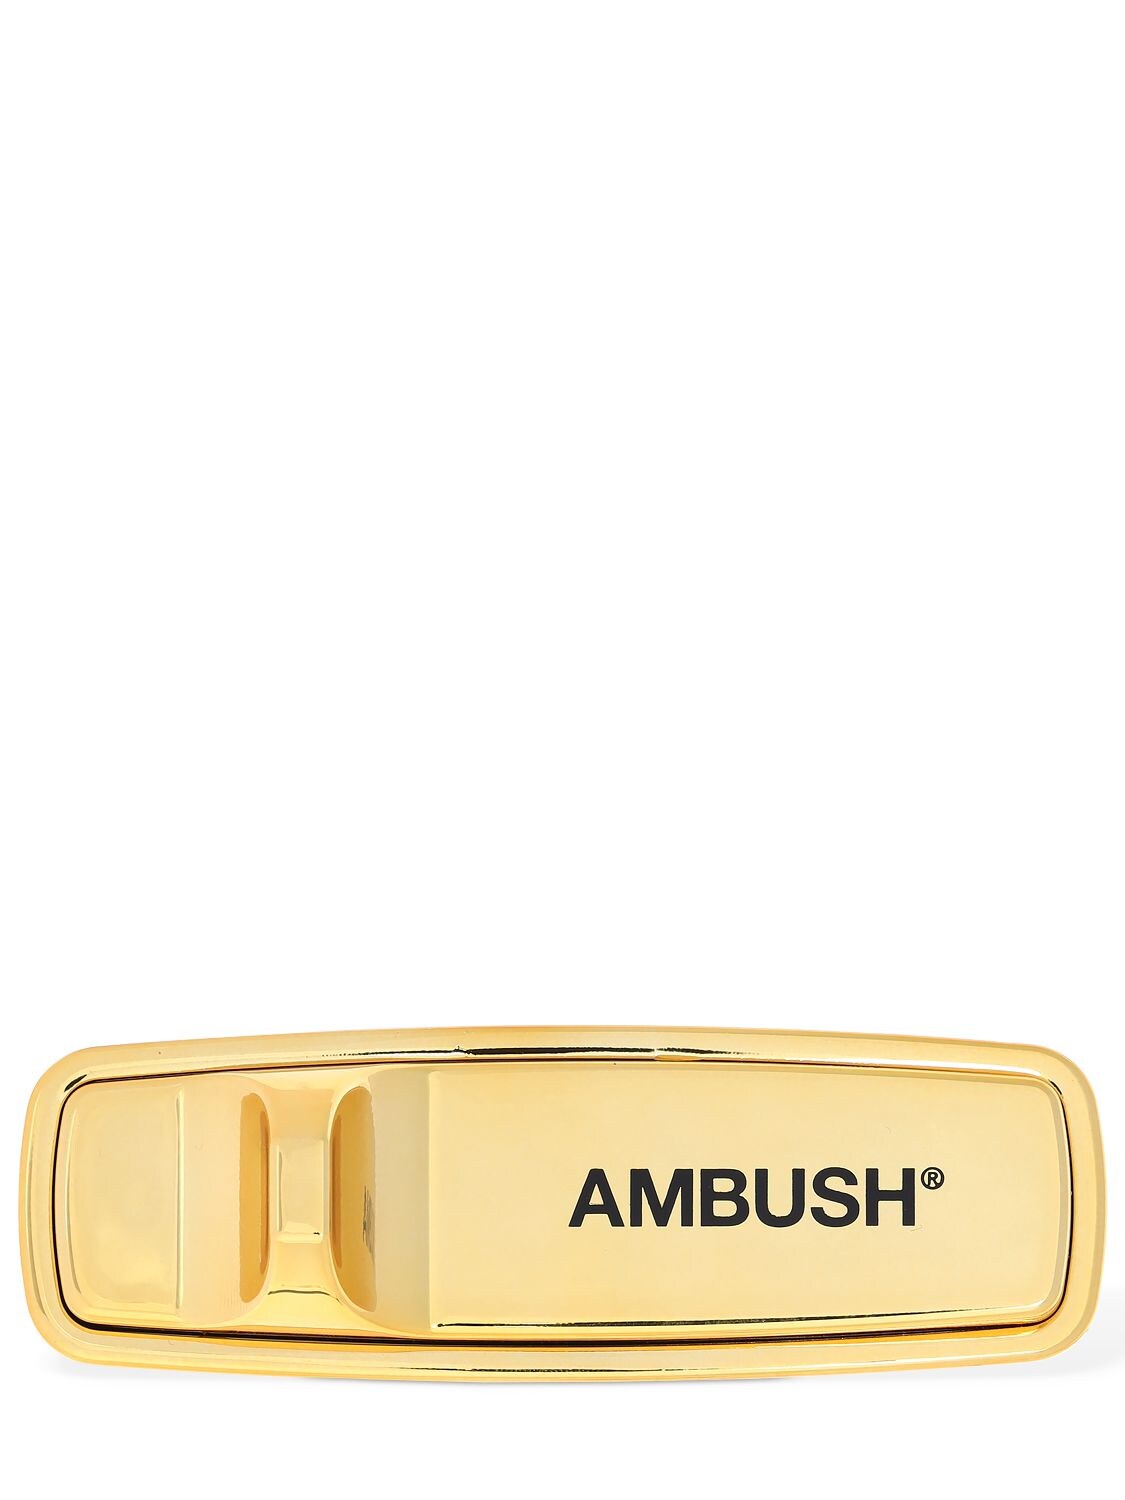 AMBUSH SECURITY TAG PIN,70IP3B007-R09MRA2